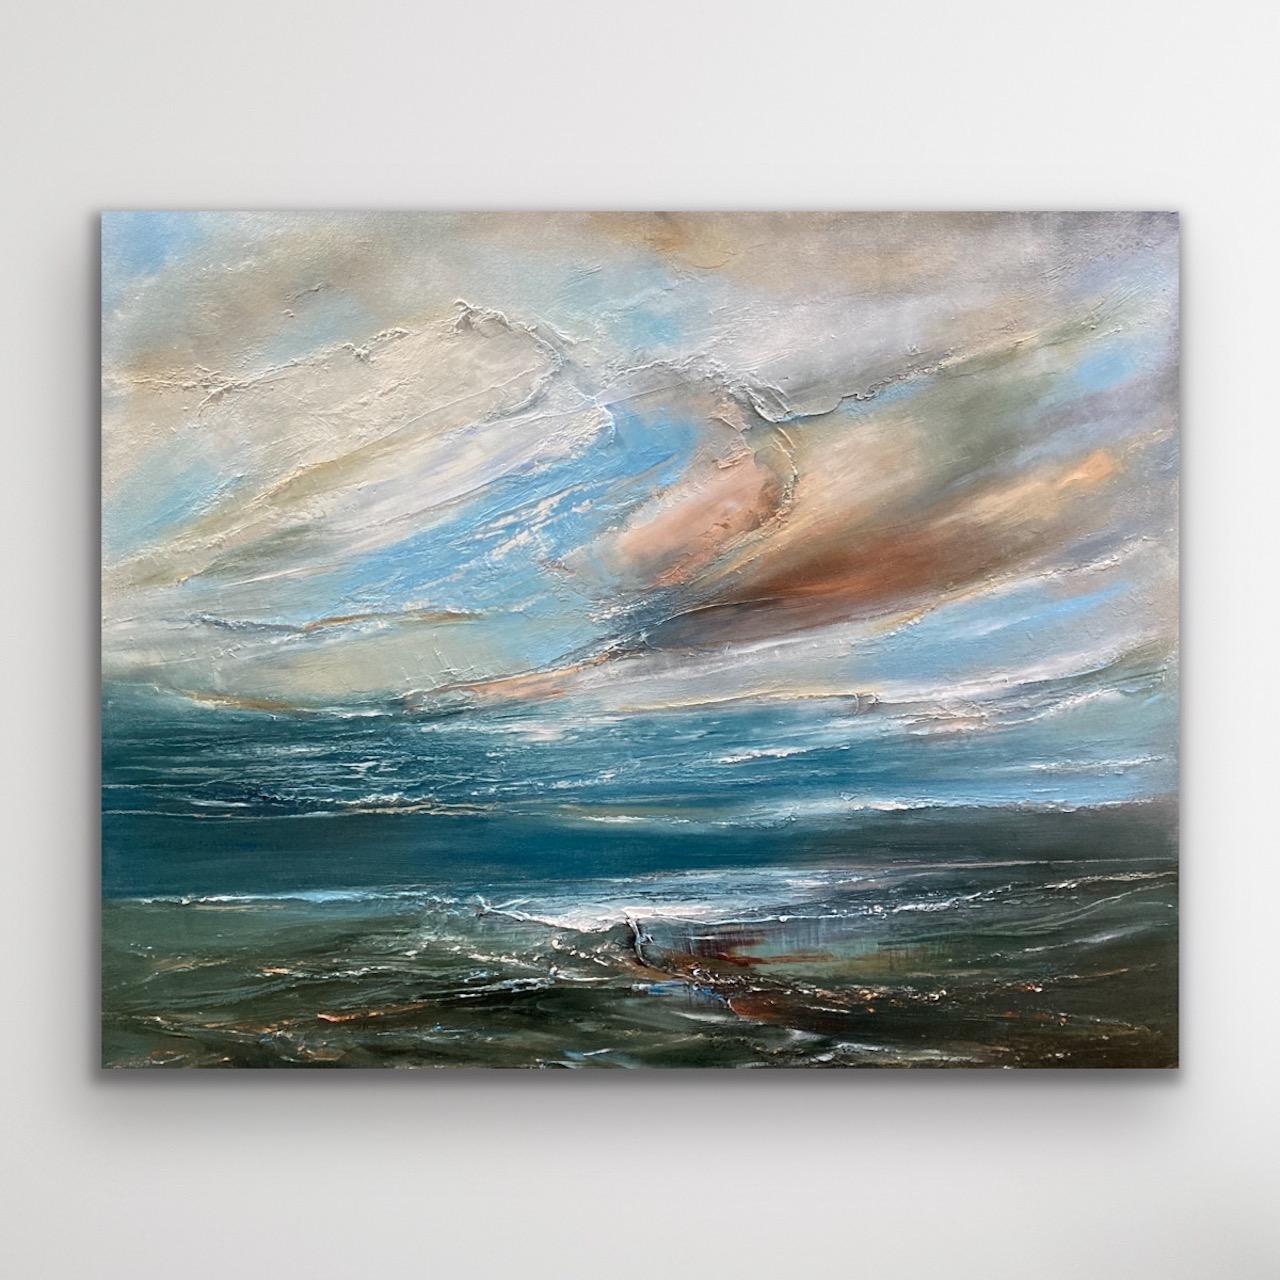 Sonnenuntergang über dem grünen Meer, Meereslandschaftsgemälde, impressionistische Küstenlandschaft (Impressionismus), Painting, von Helen Howells